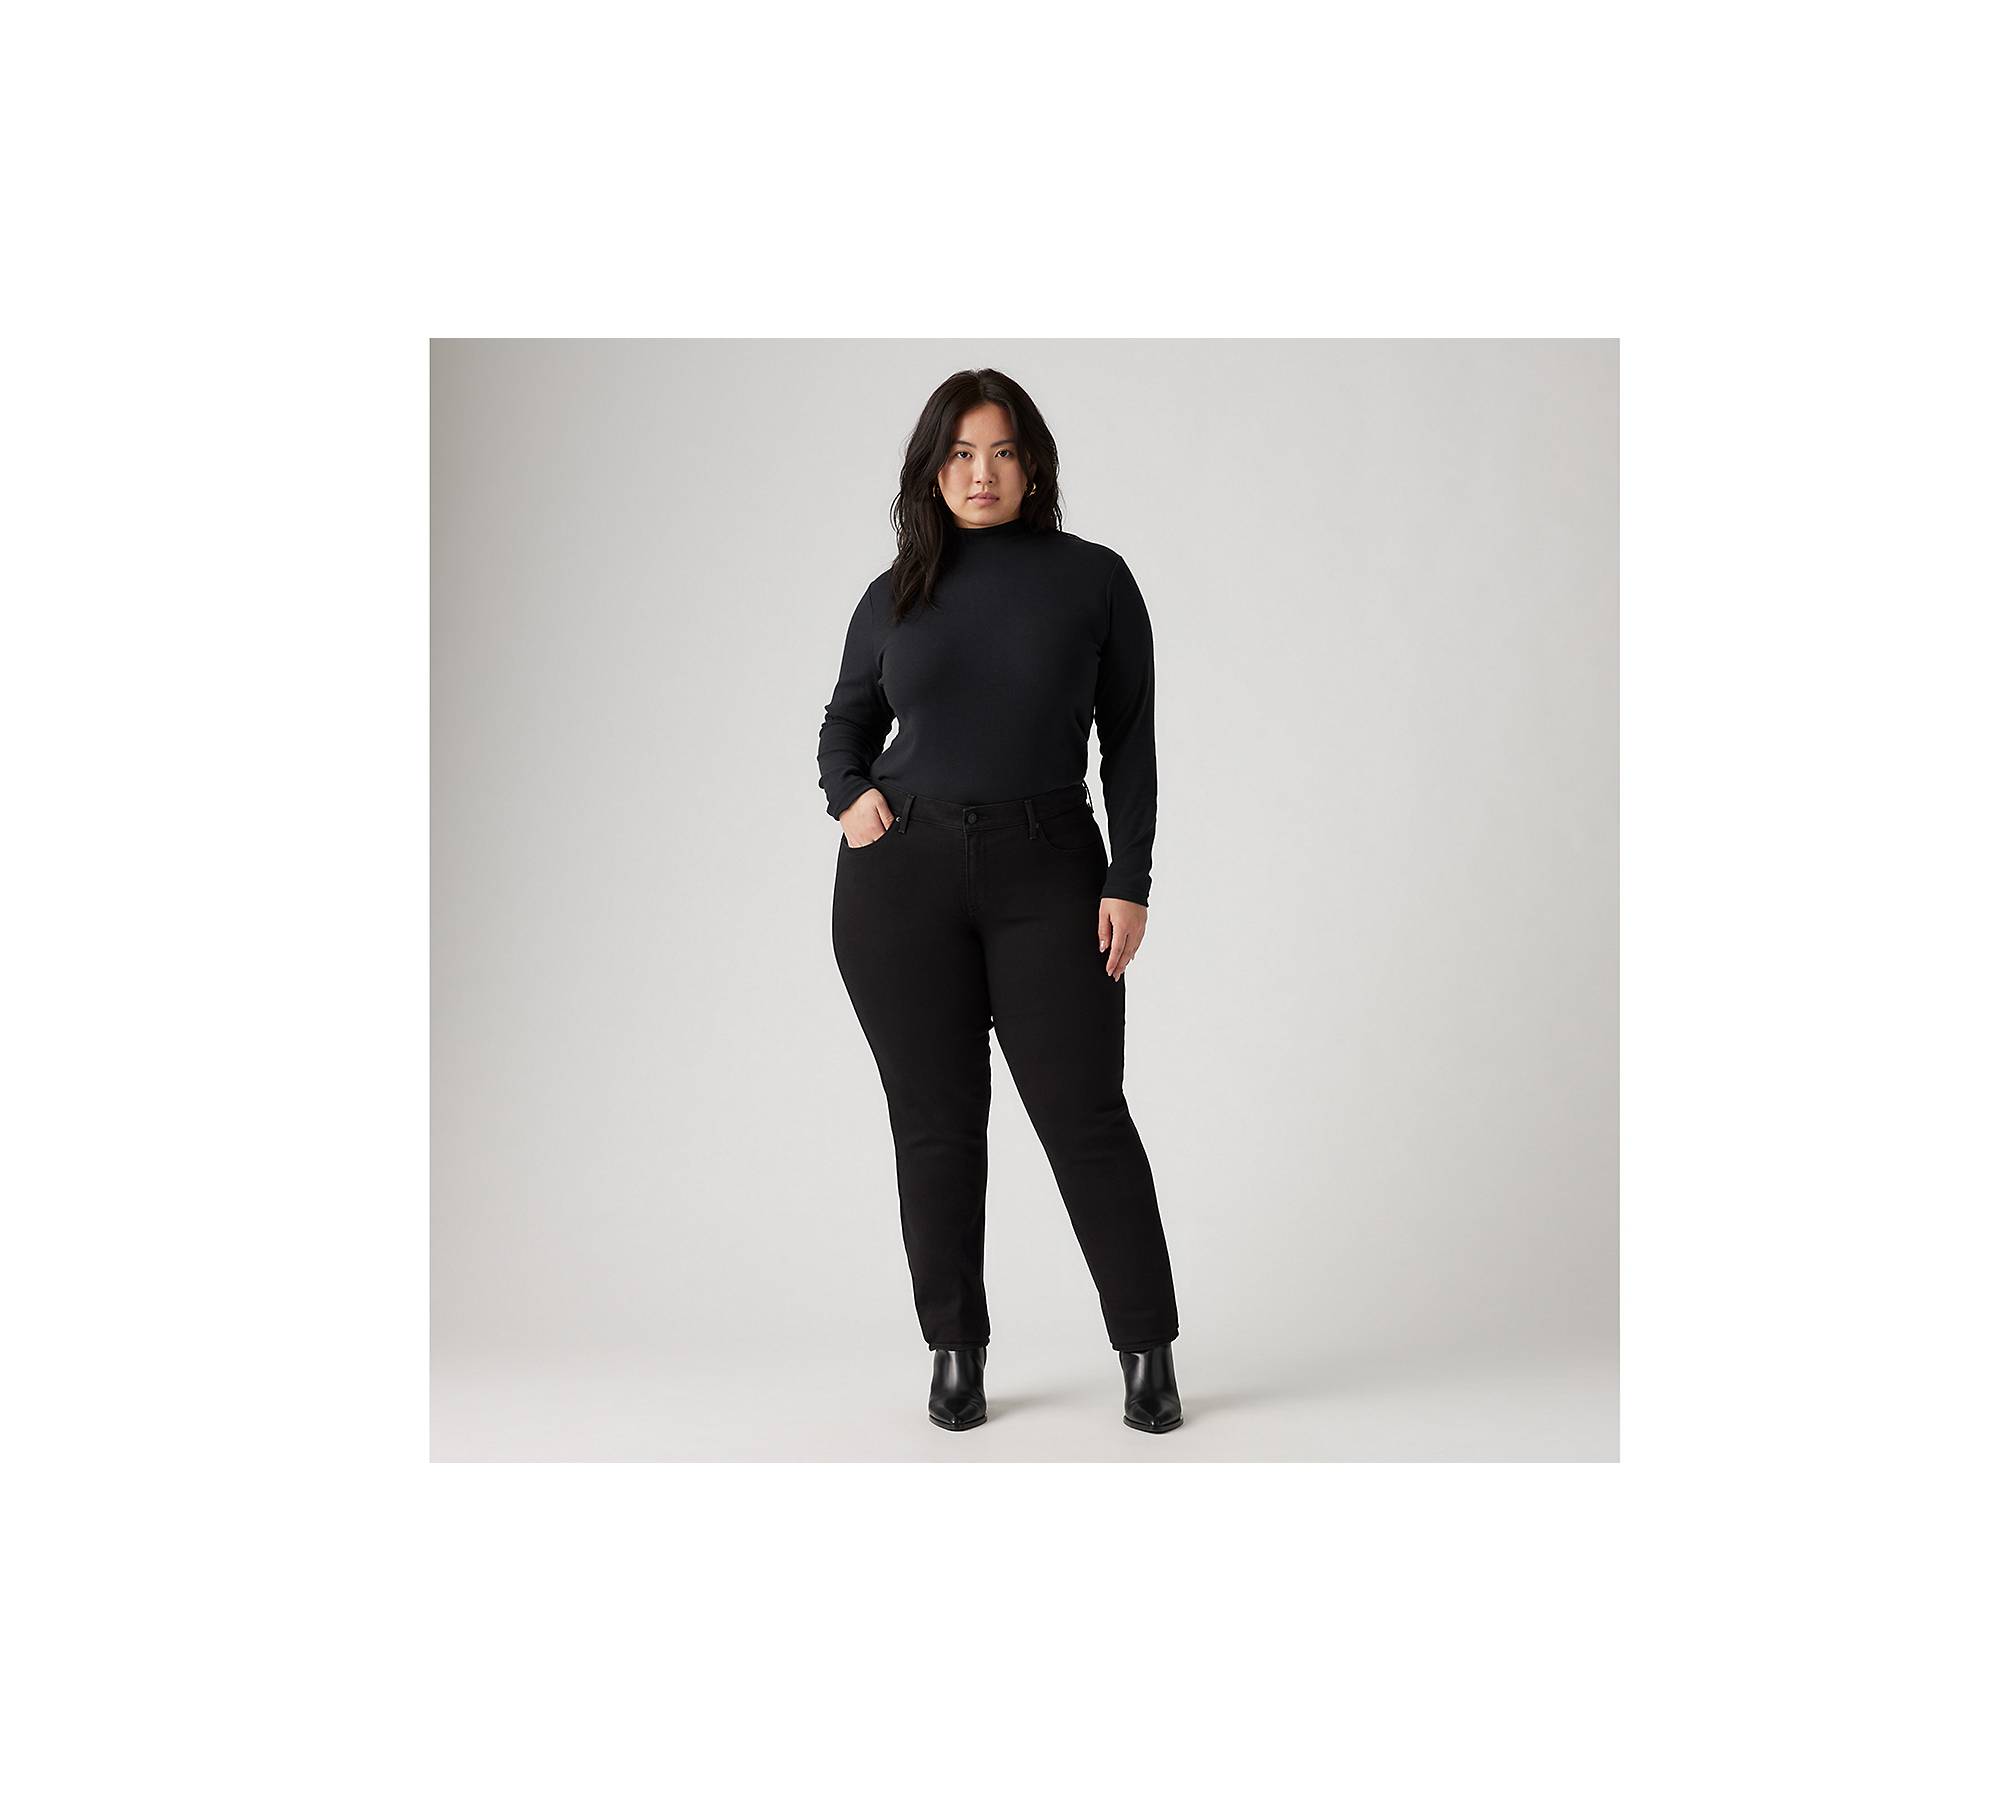 Levi's Women's 311 Shaping Mid Rise Skinny Jeans - Soft Black